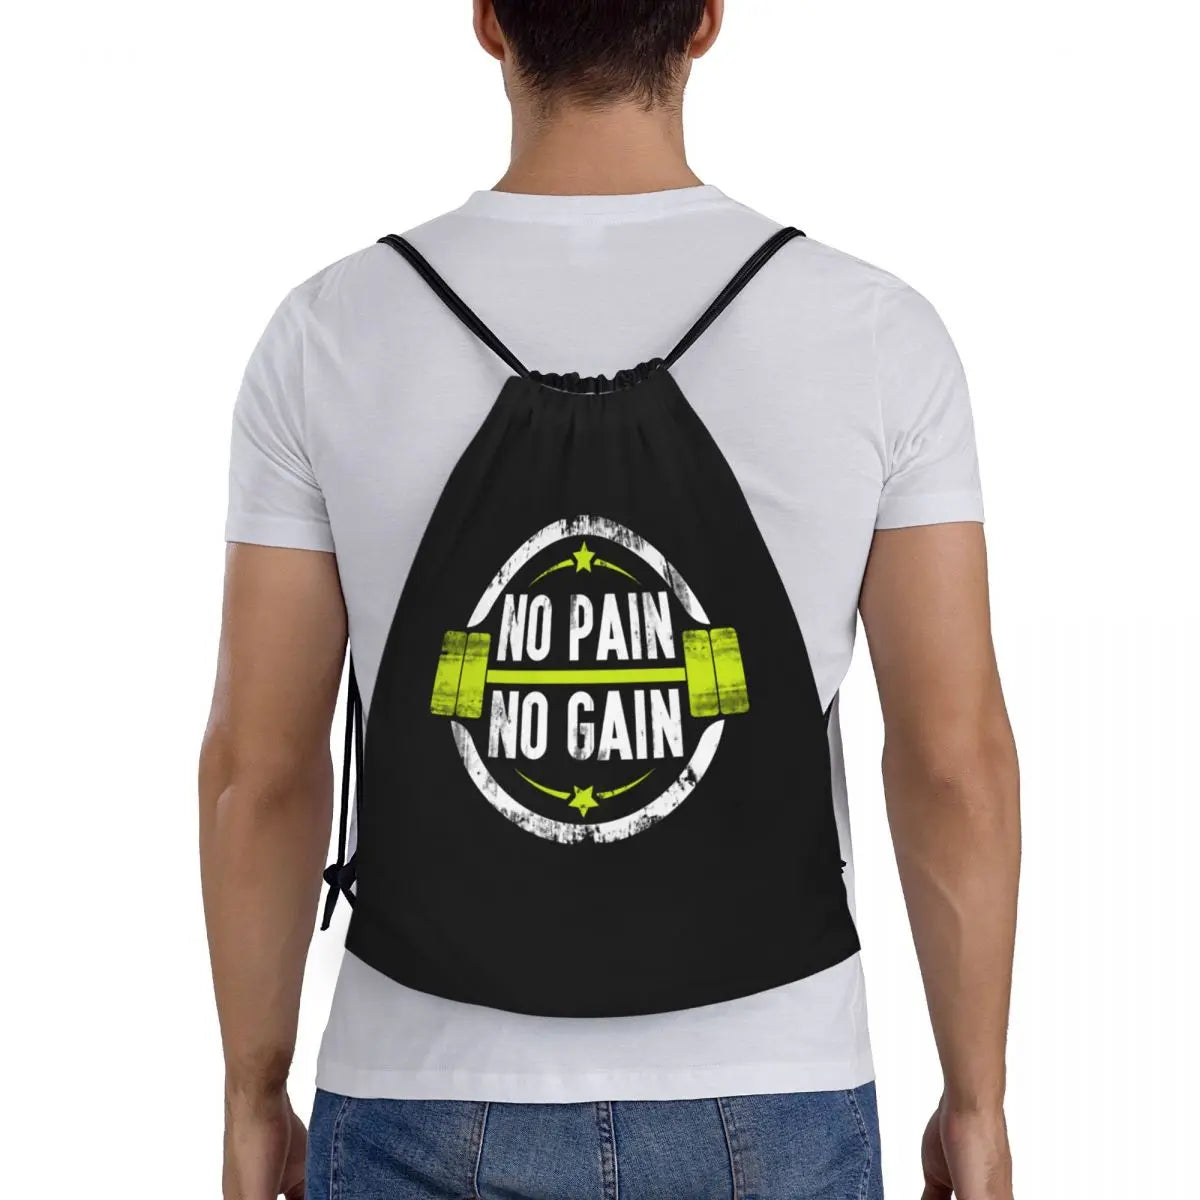 "NO PAIN NO GAIN" Drawstring Backpack (UNISEX)